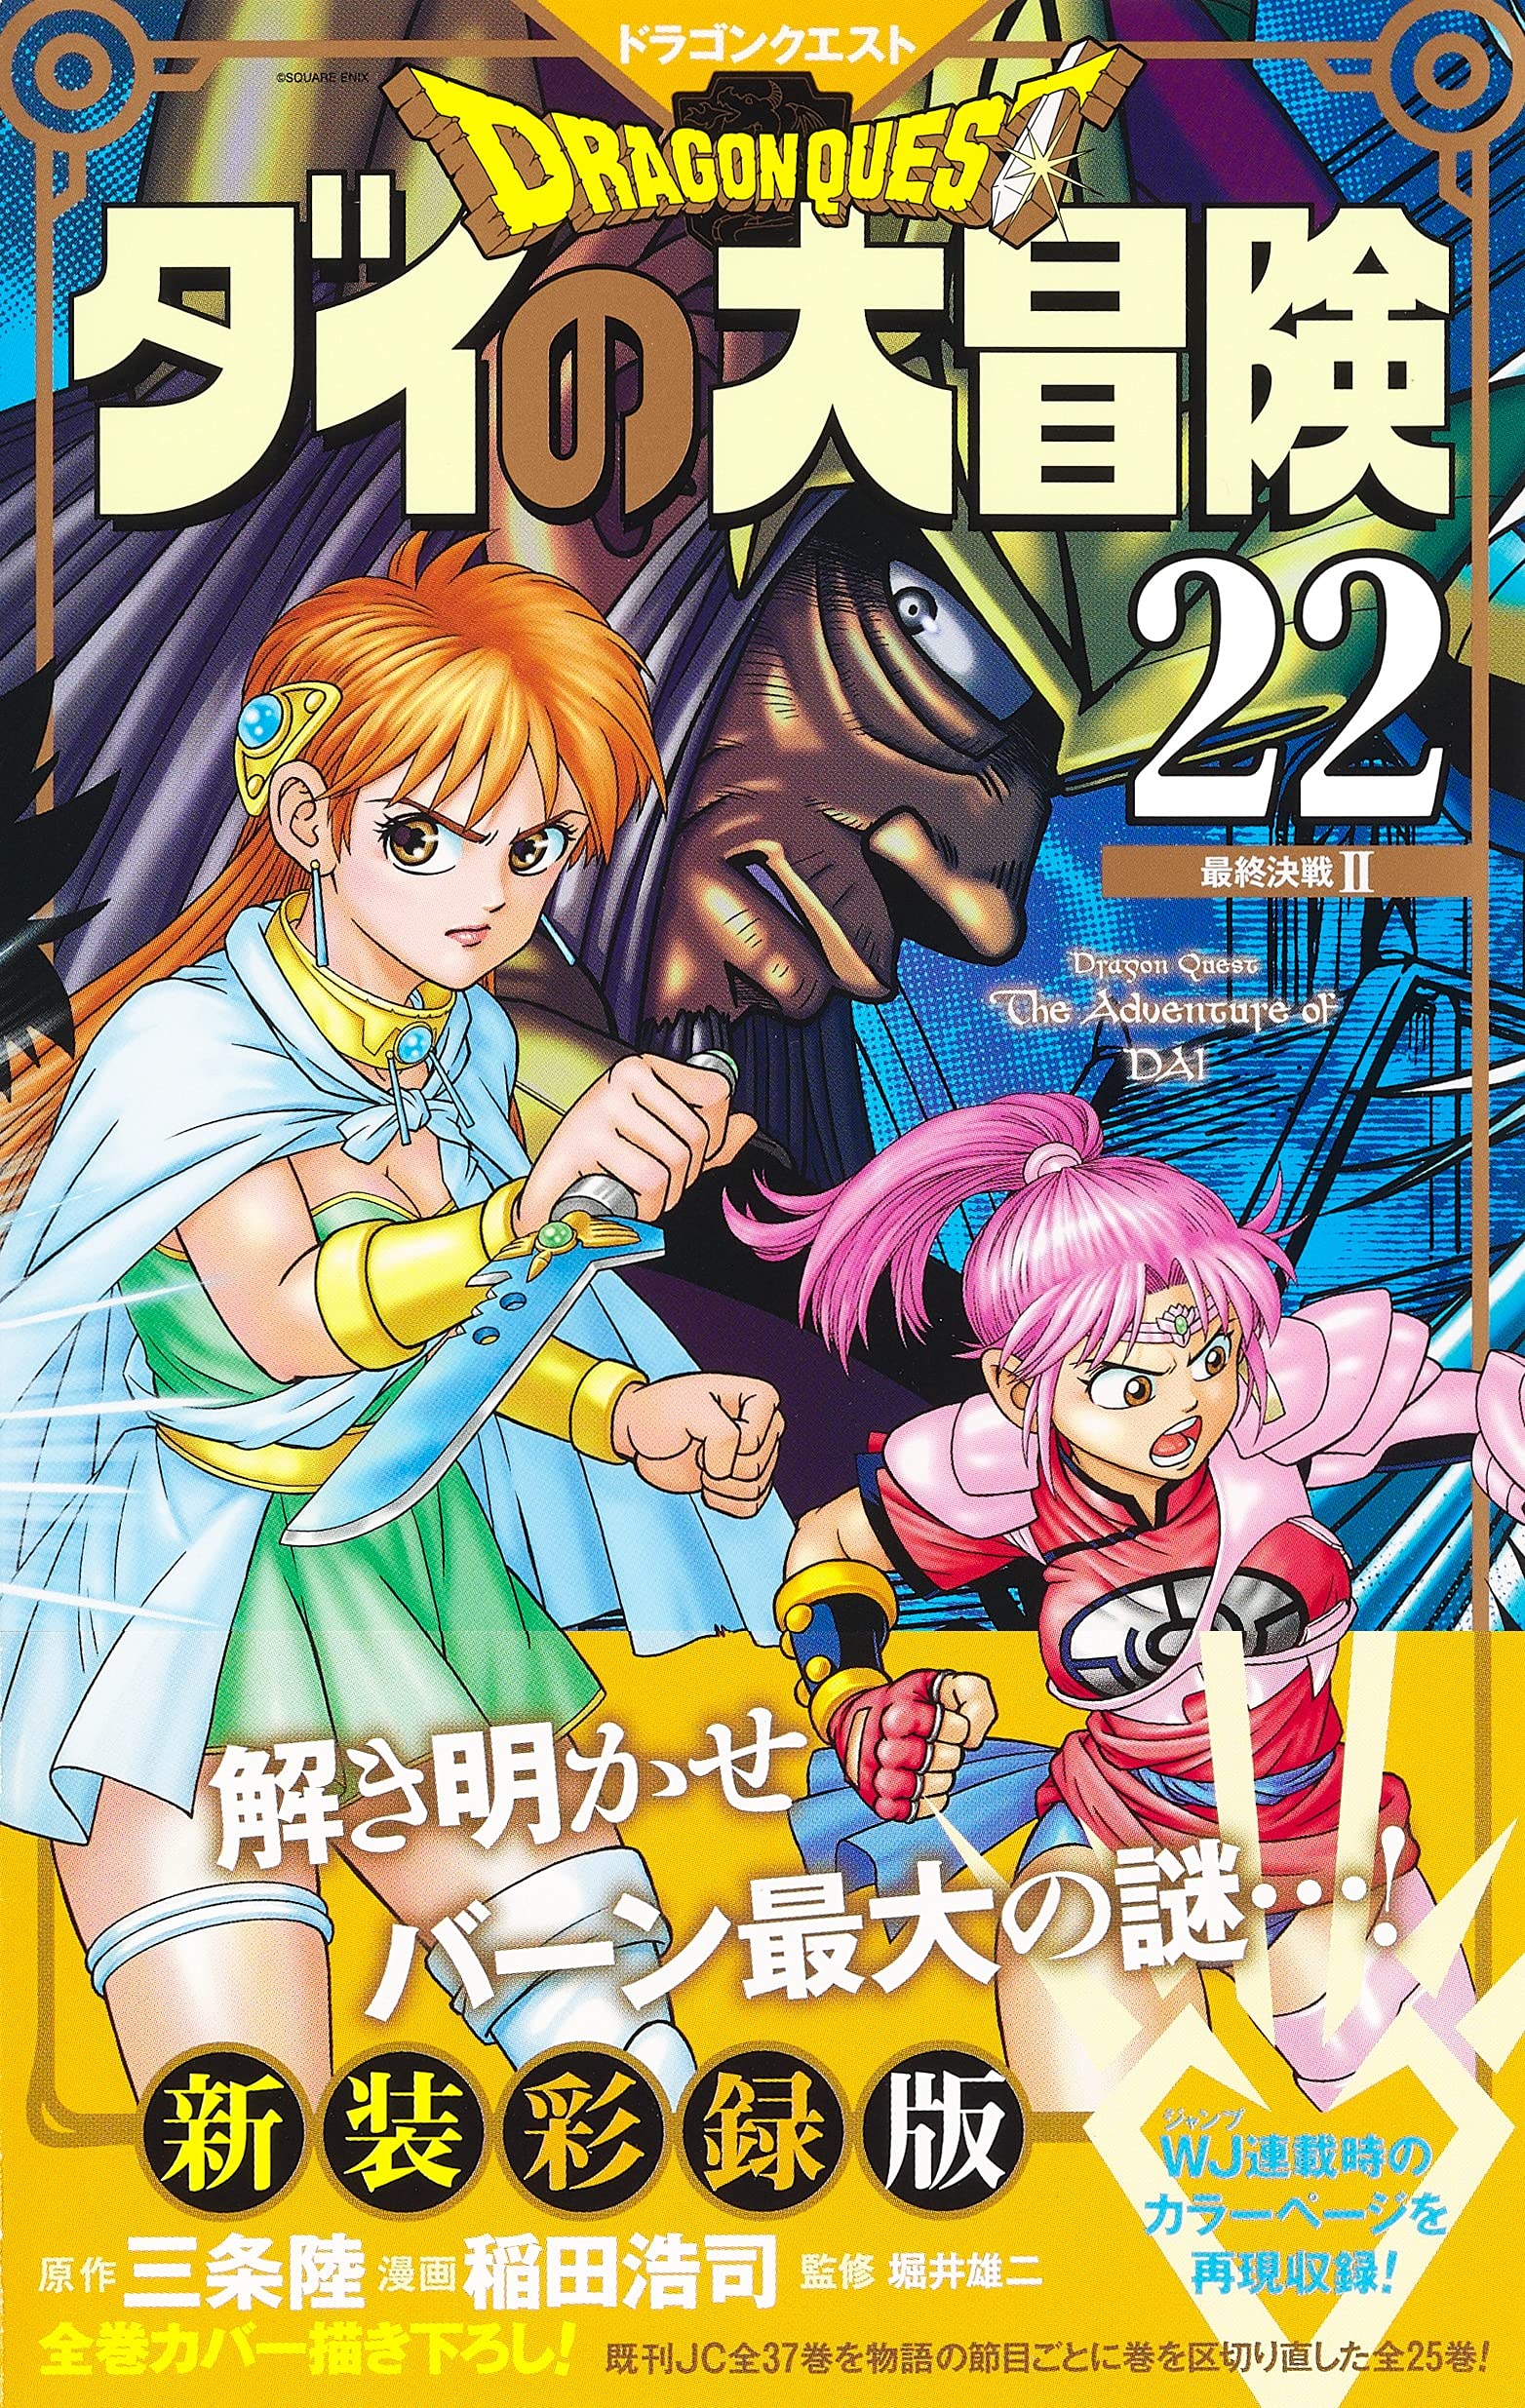 CDJapan : [New Cover Edition] Dragon Quest: The Adventure of Dai 12  (Collector's Edition Comics) Riku Sanjo, Koji Inada BOOK